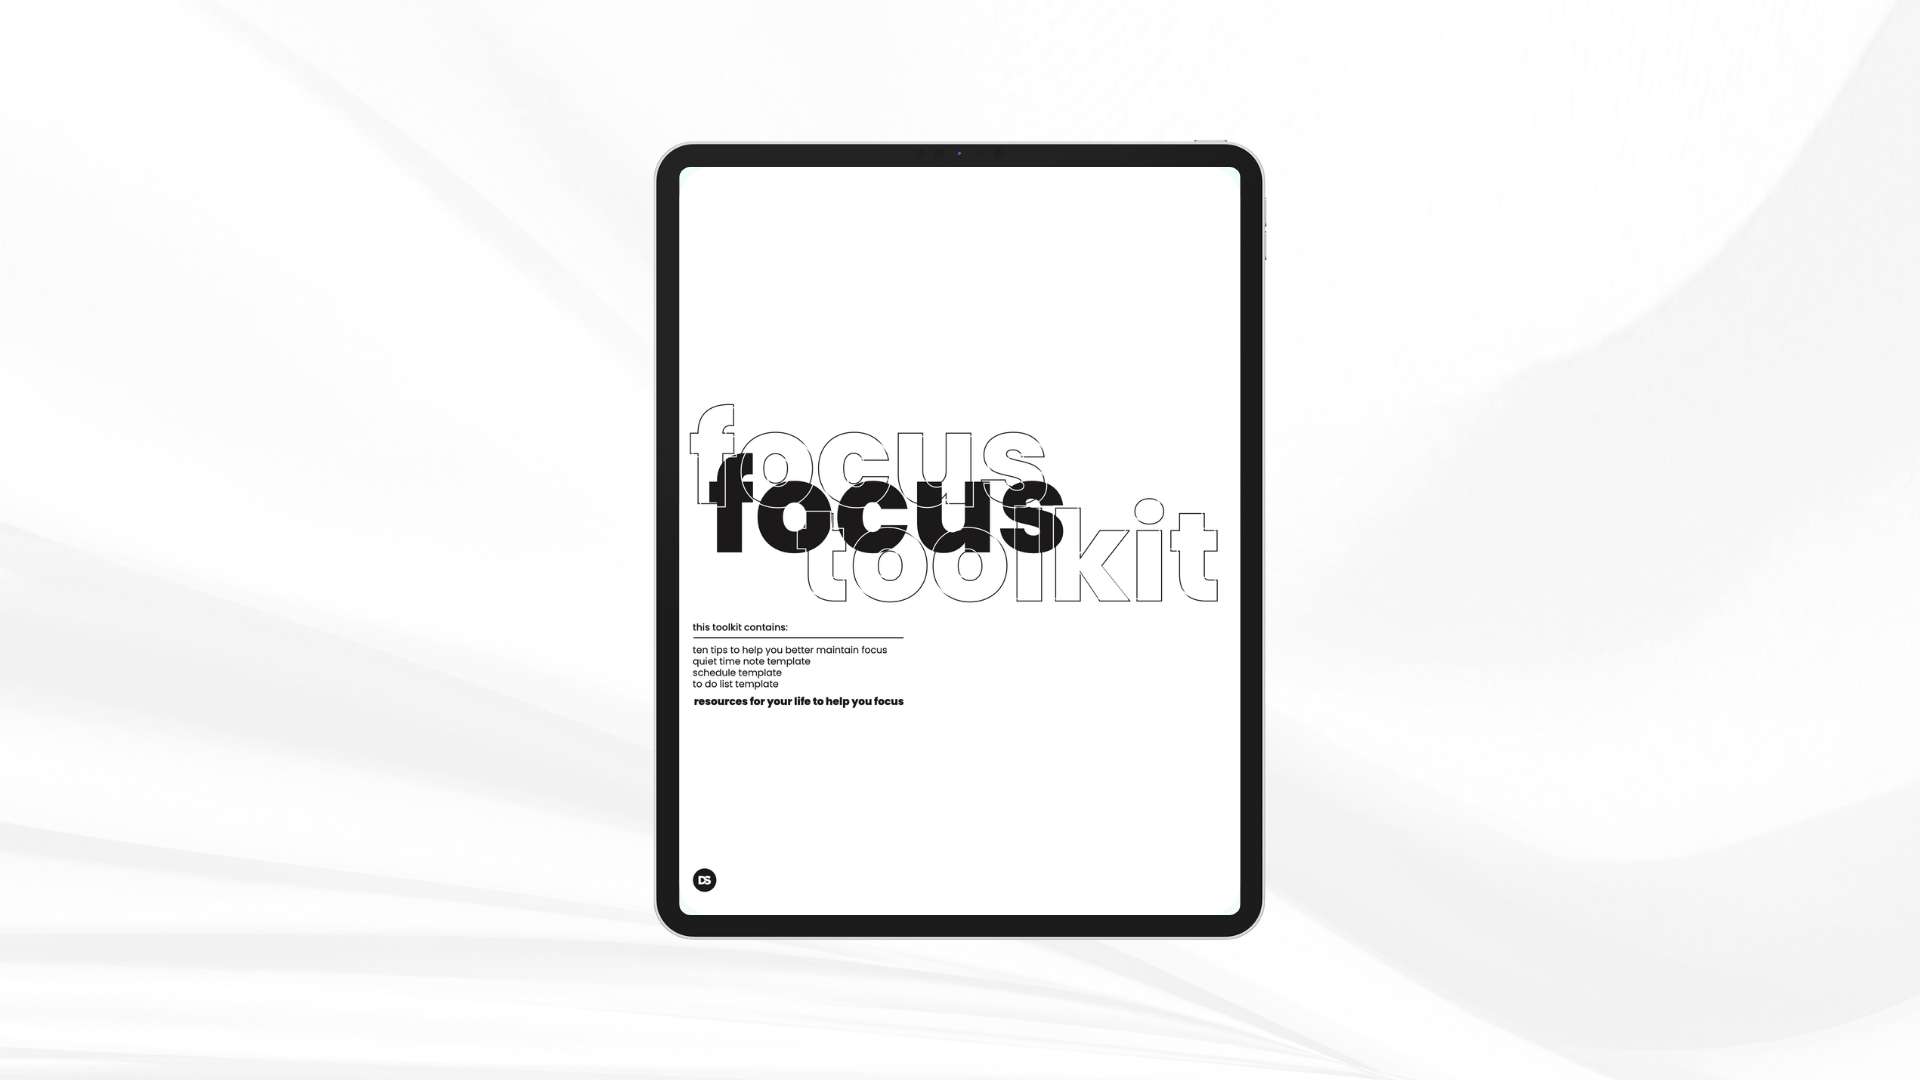 The Focus Toolkit 4